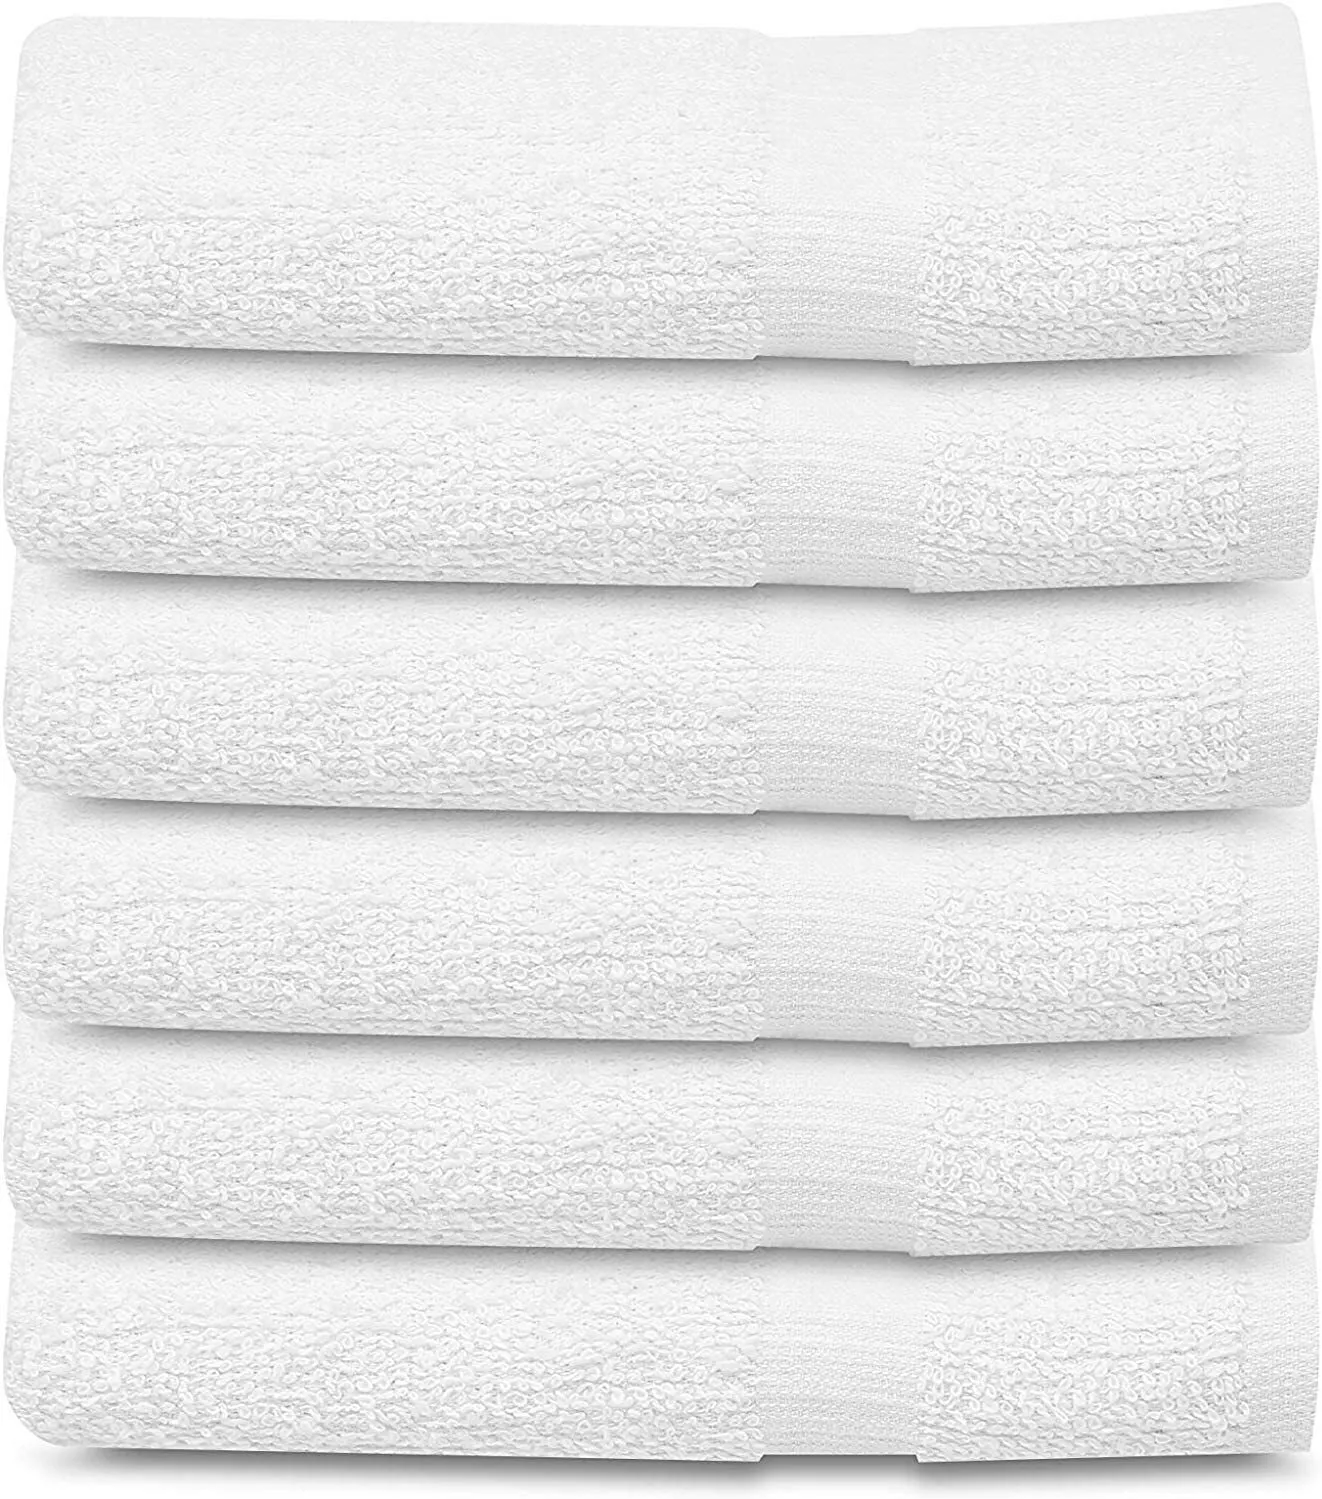 Bath Towels 6 Pack "22x44" White Cotton Towel Set Bath Pool Gym Towels Beach